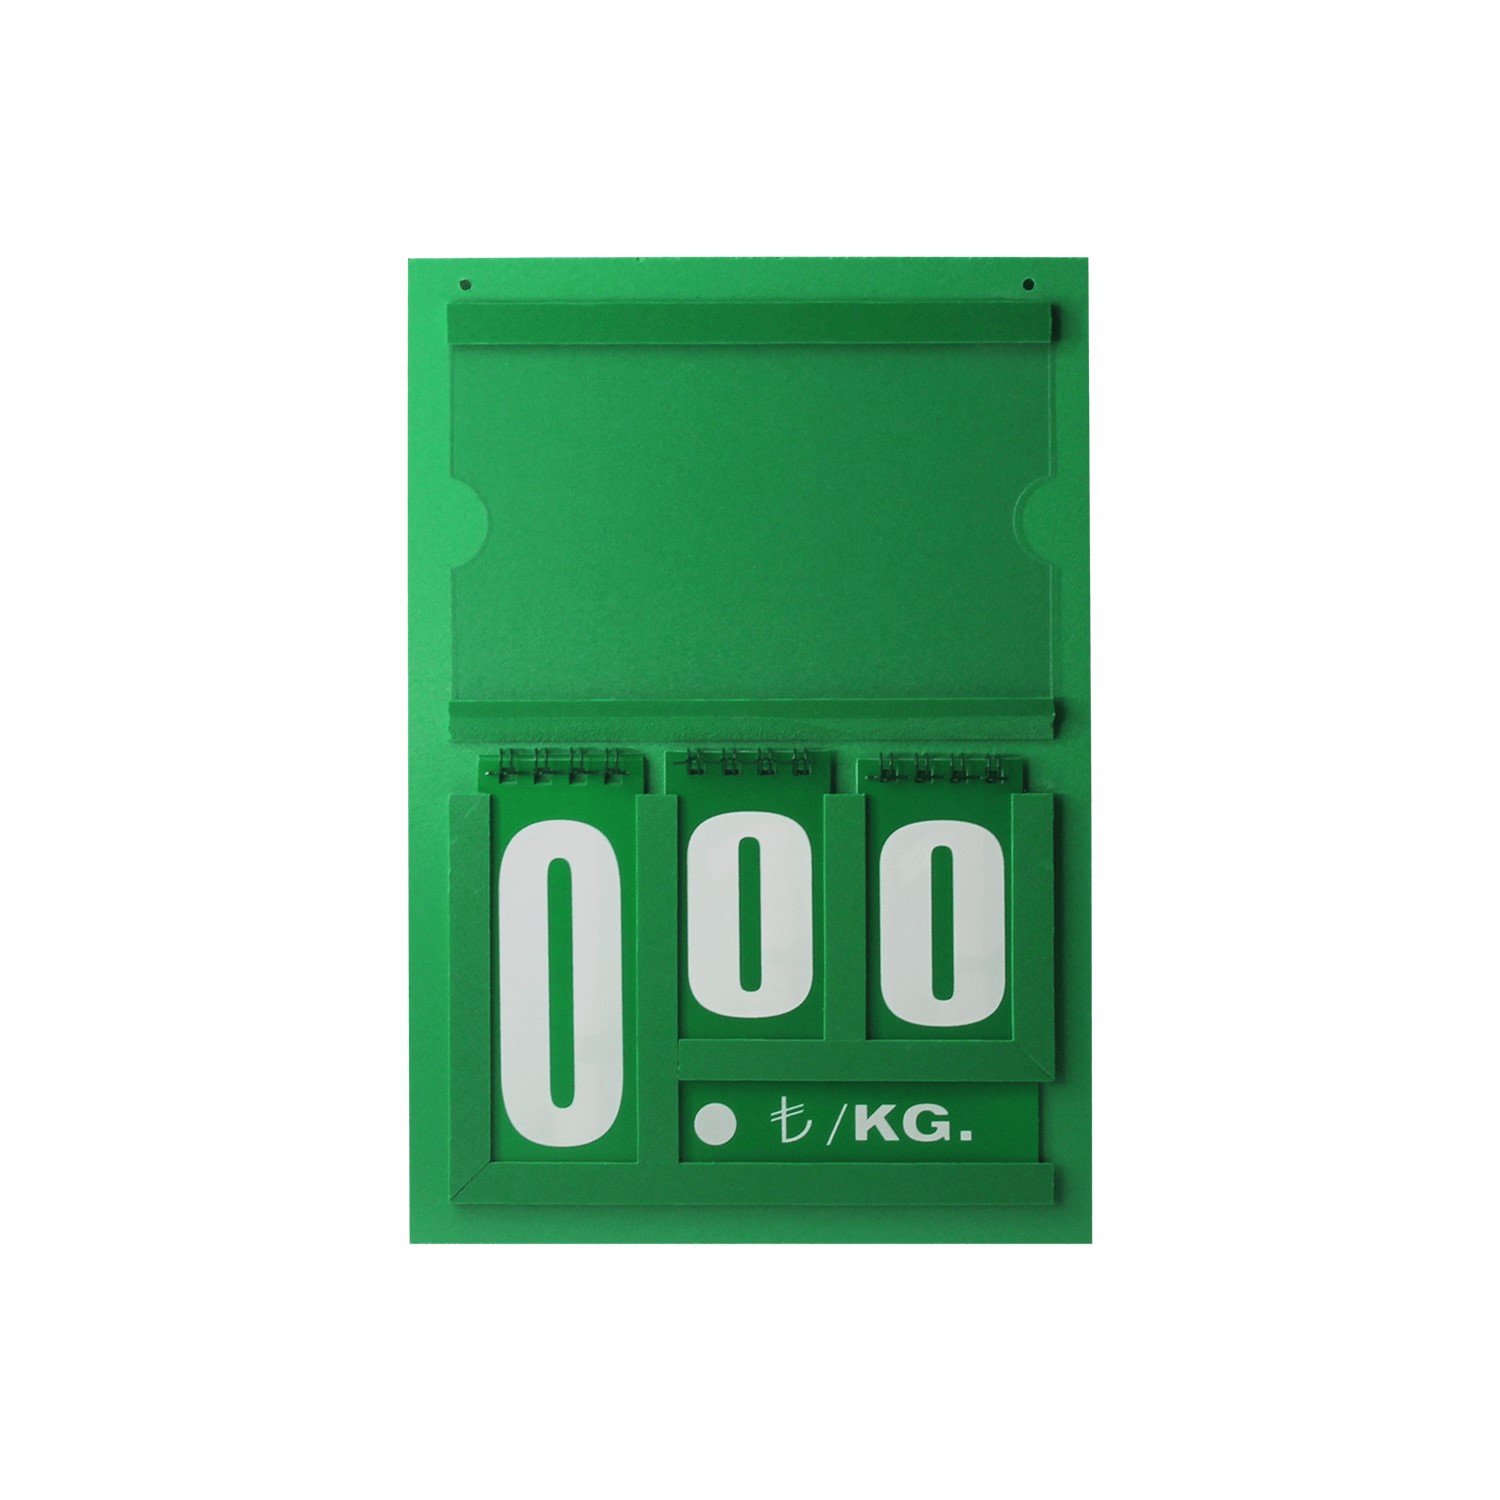 Resimli Manav Etiketi Mini Tek Taraflı 16x24 cm Yeşil -1.jpg (137 KB)